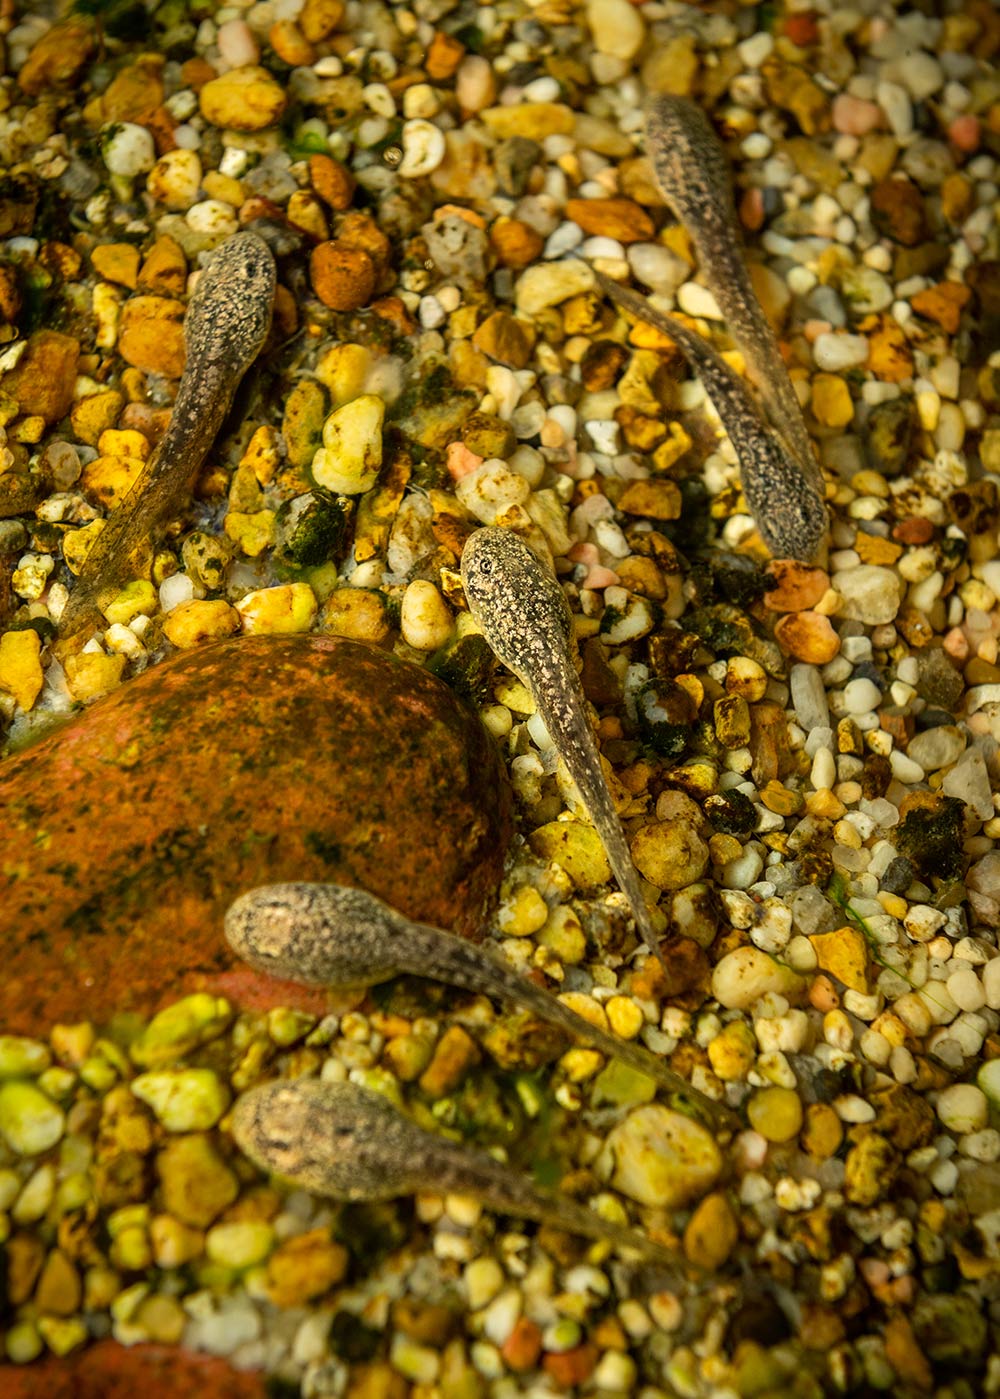 Tadpoles swimming in a rocky stream